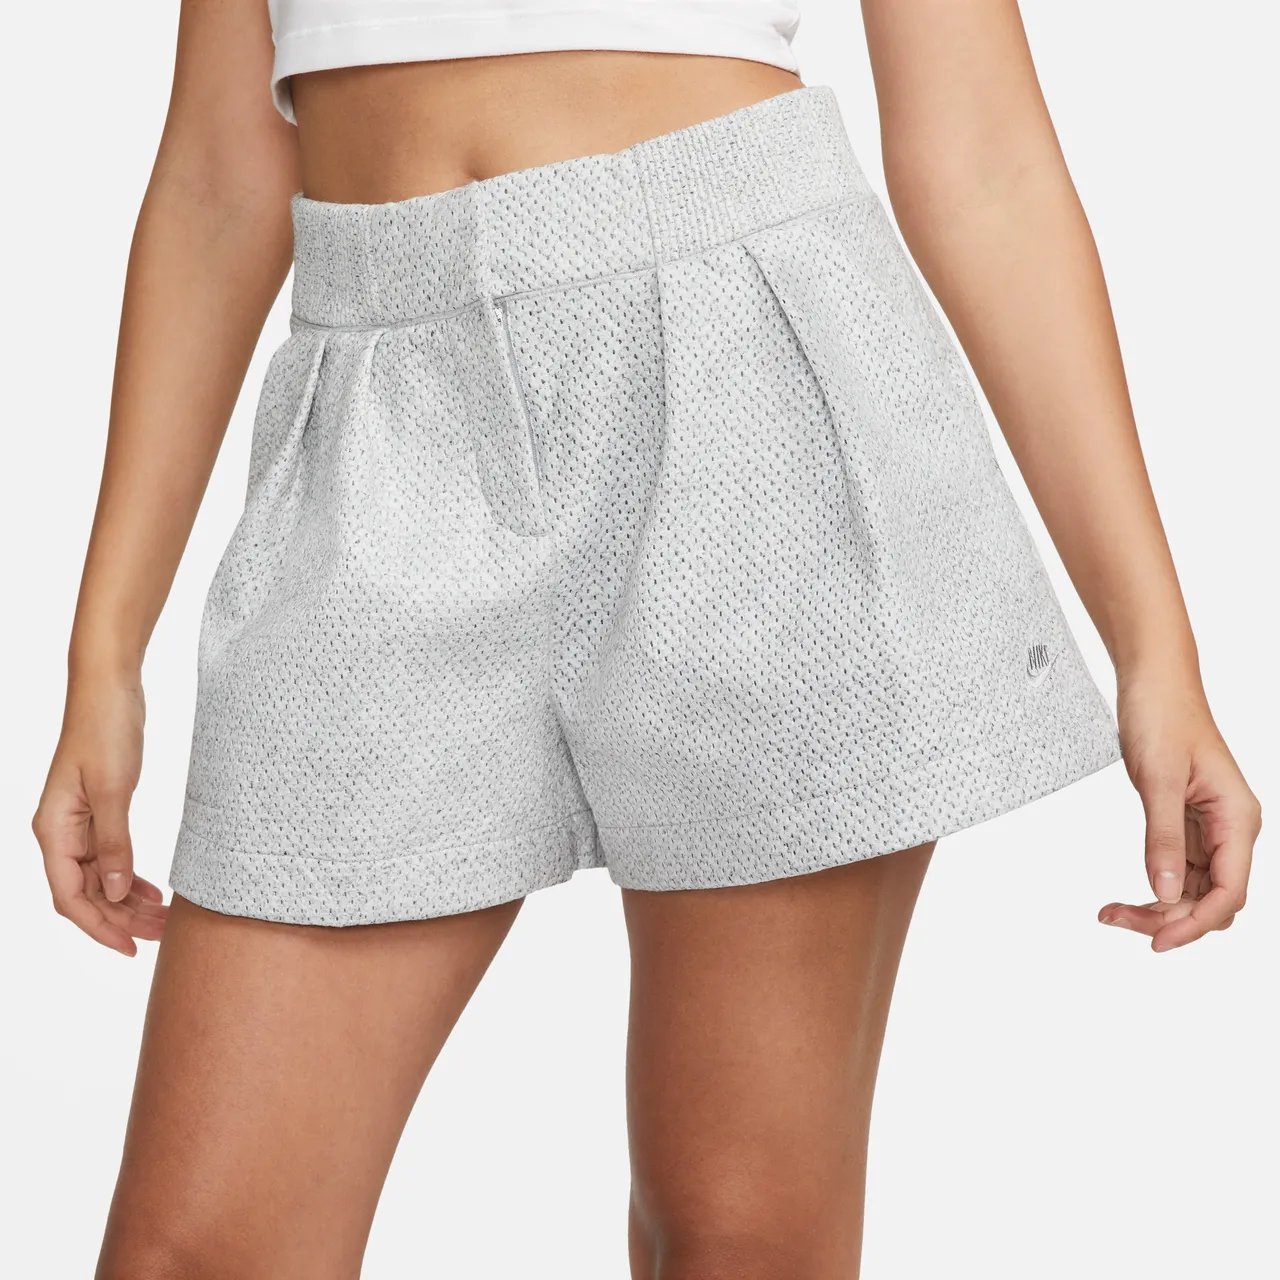 Nike Forward Shorts damesshorts met hoge taille - Grijs